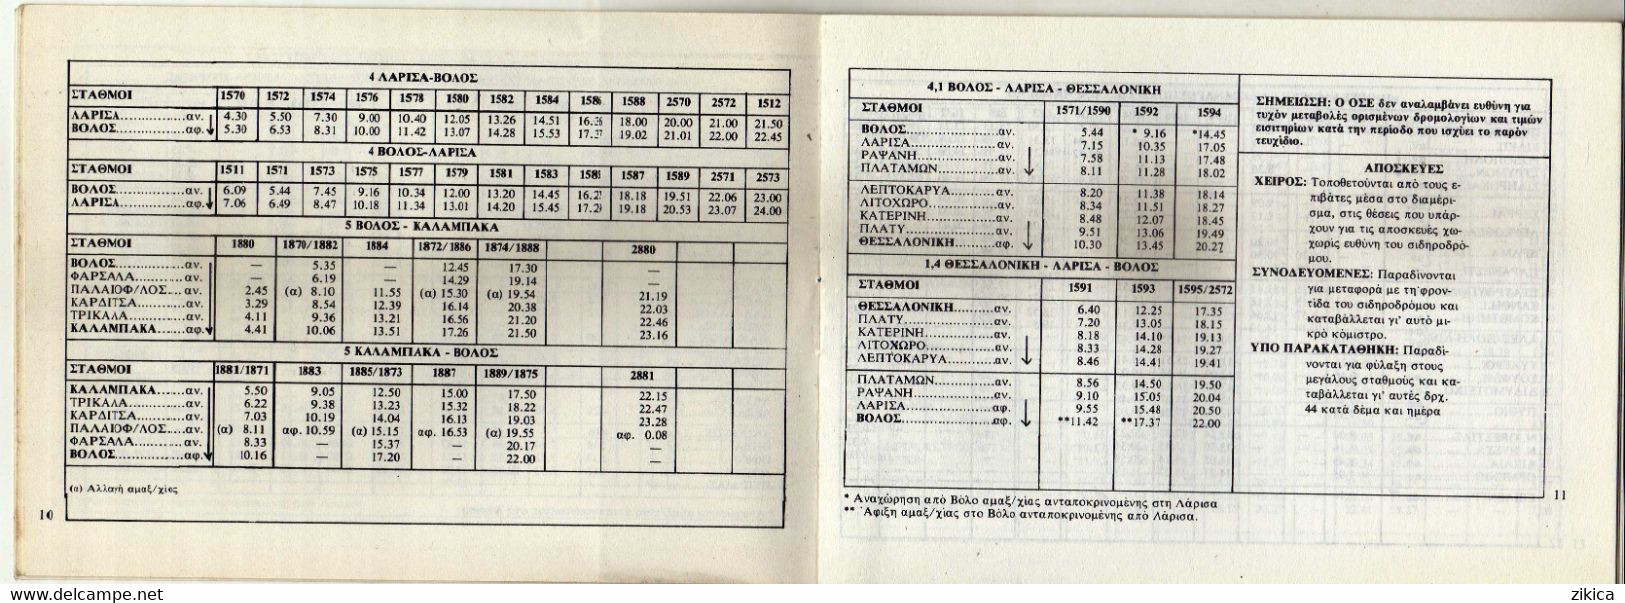 Transportation plan - Greece Railway 1988